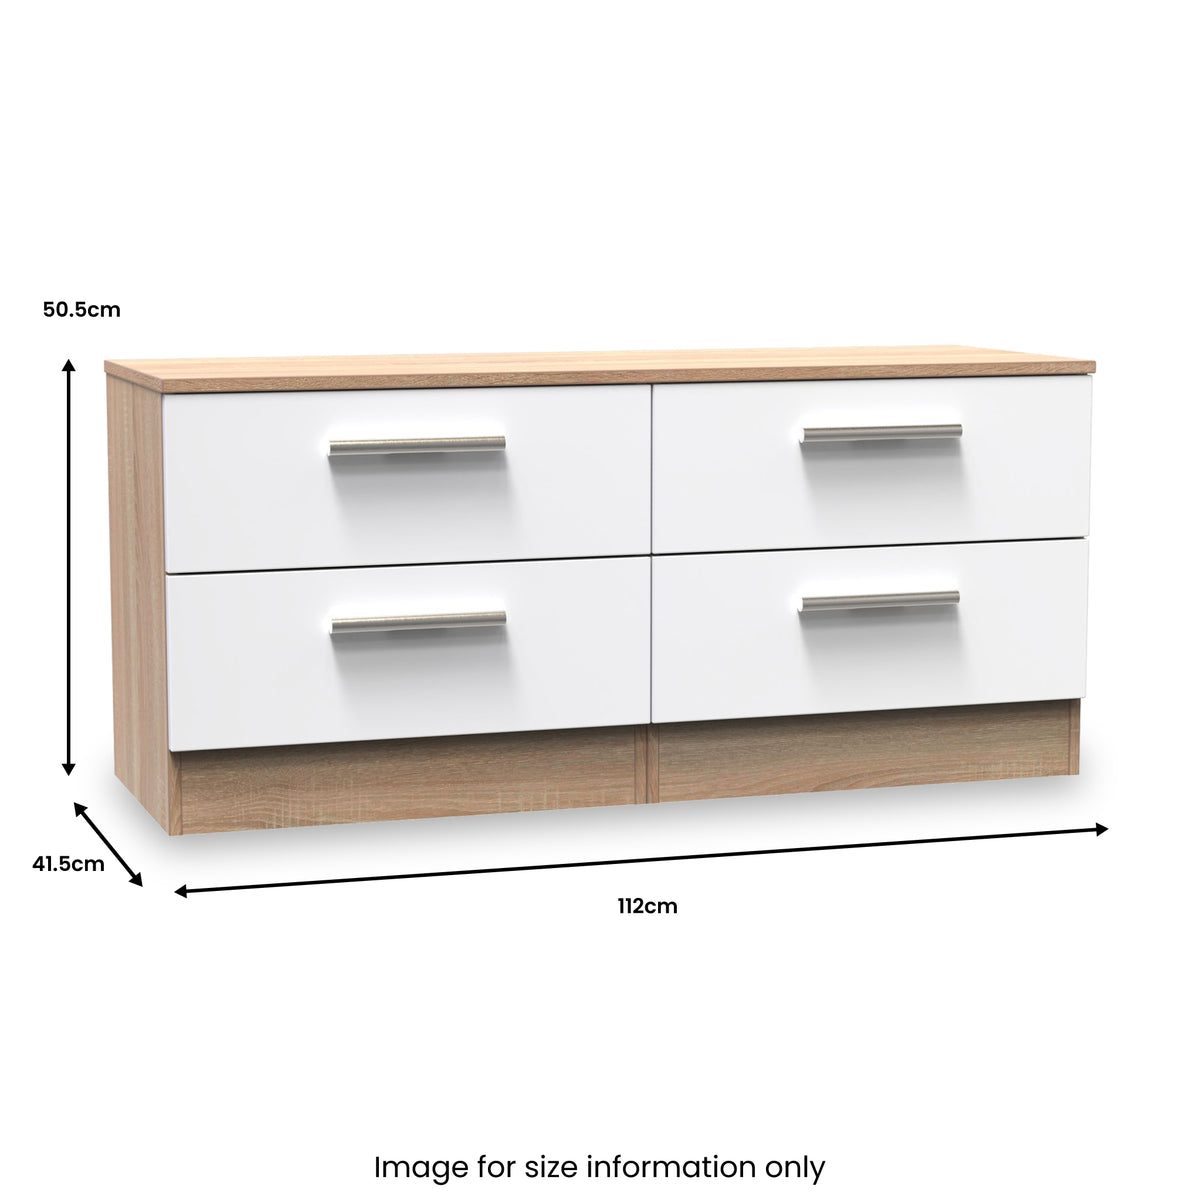 Blakely White Oak 4 Drawer Storage Unit from Roseland Furniture